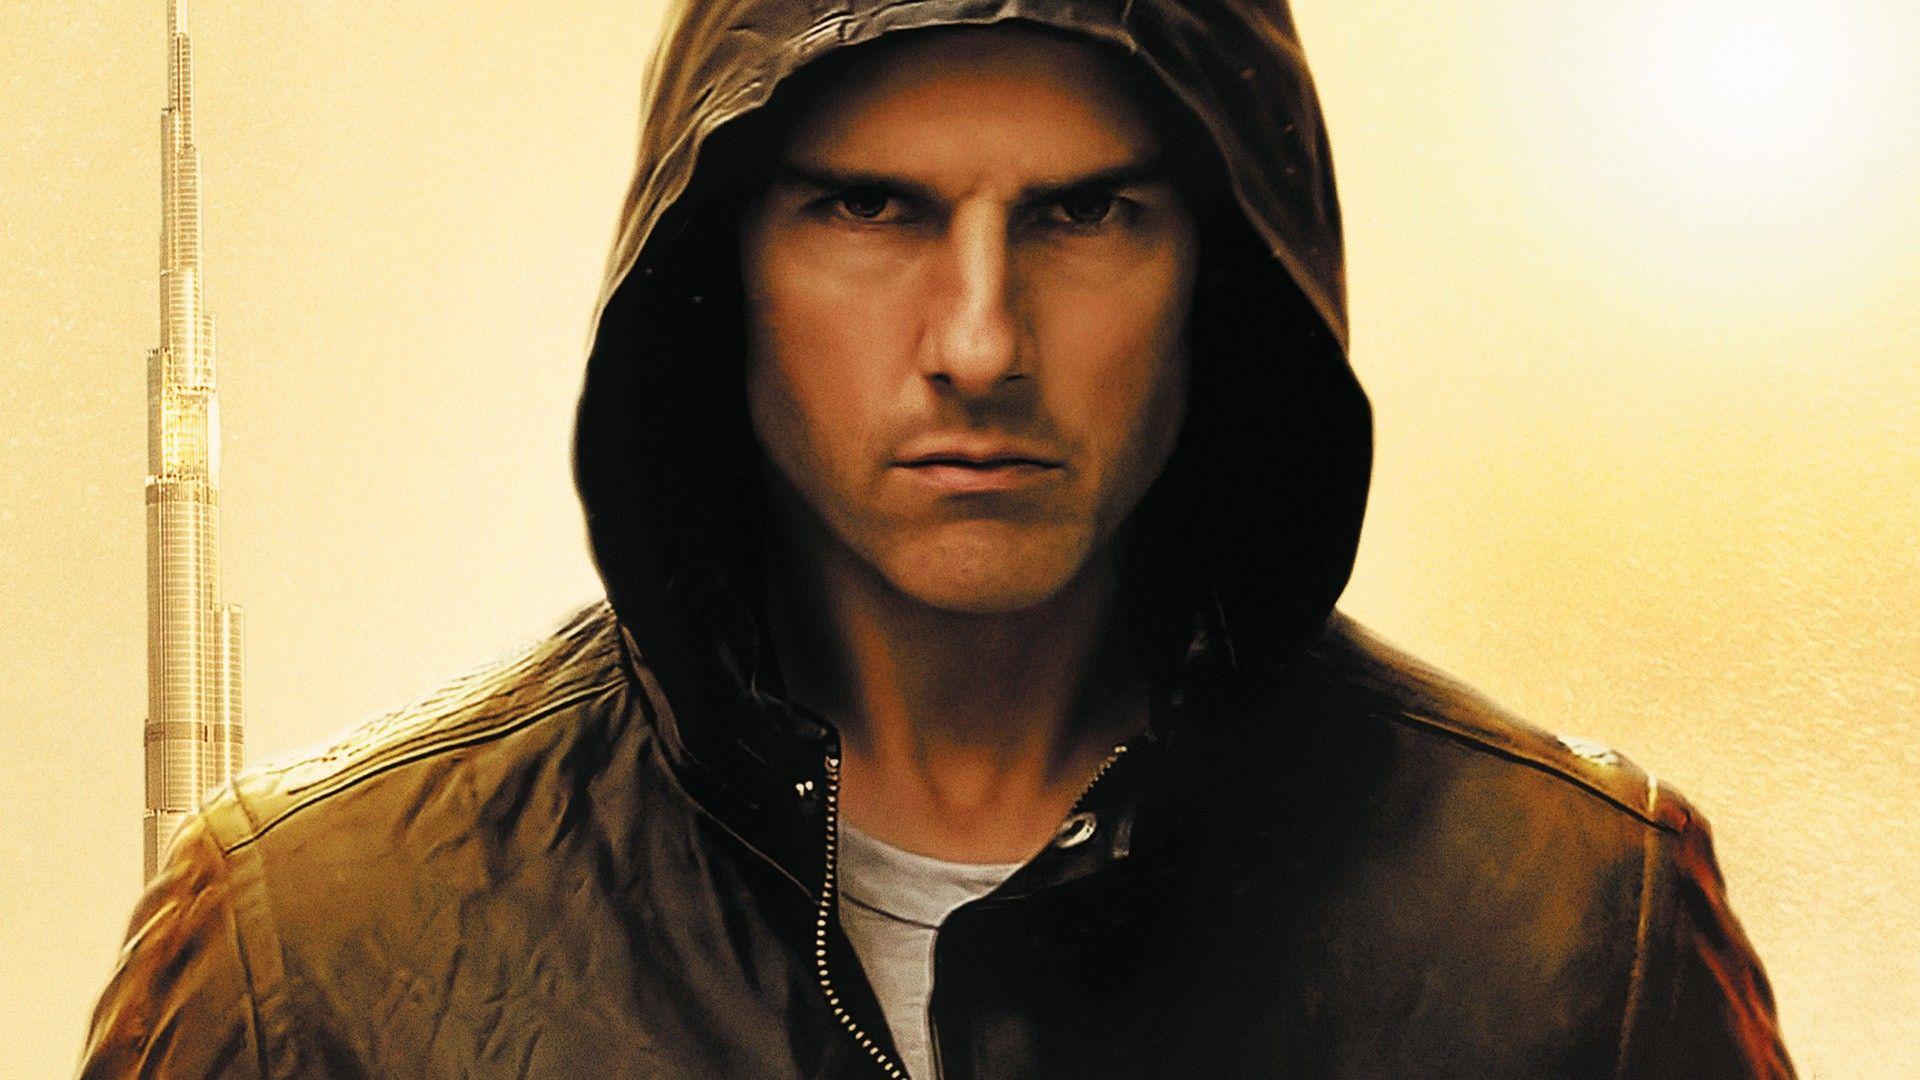 Tom Cruise HD Wallpaper 3249 1920x1080 px